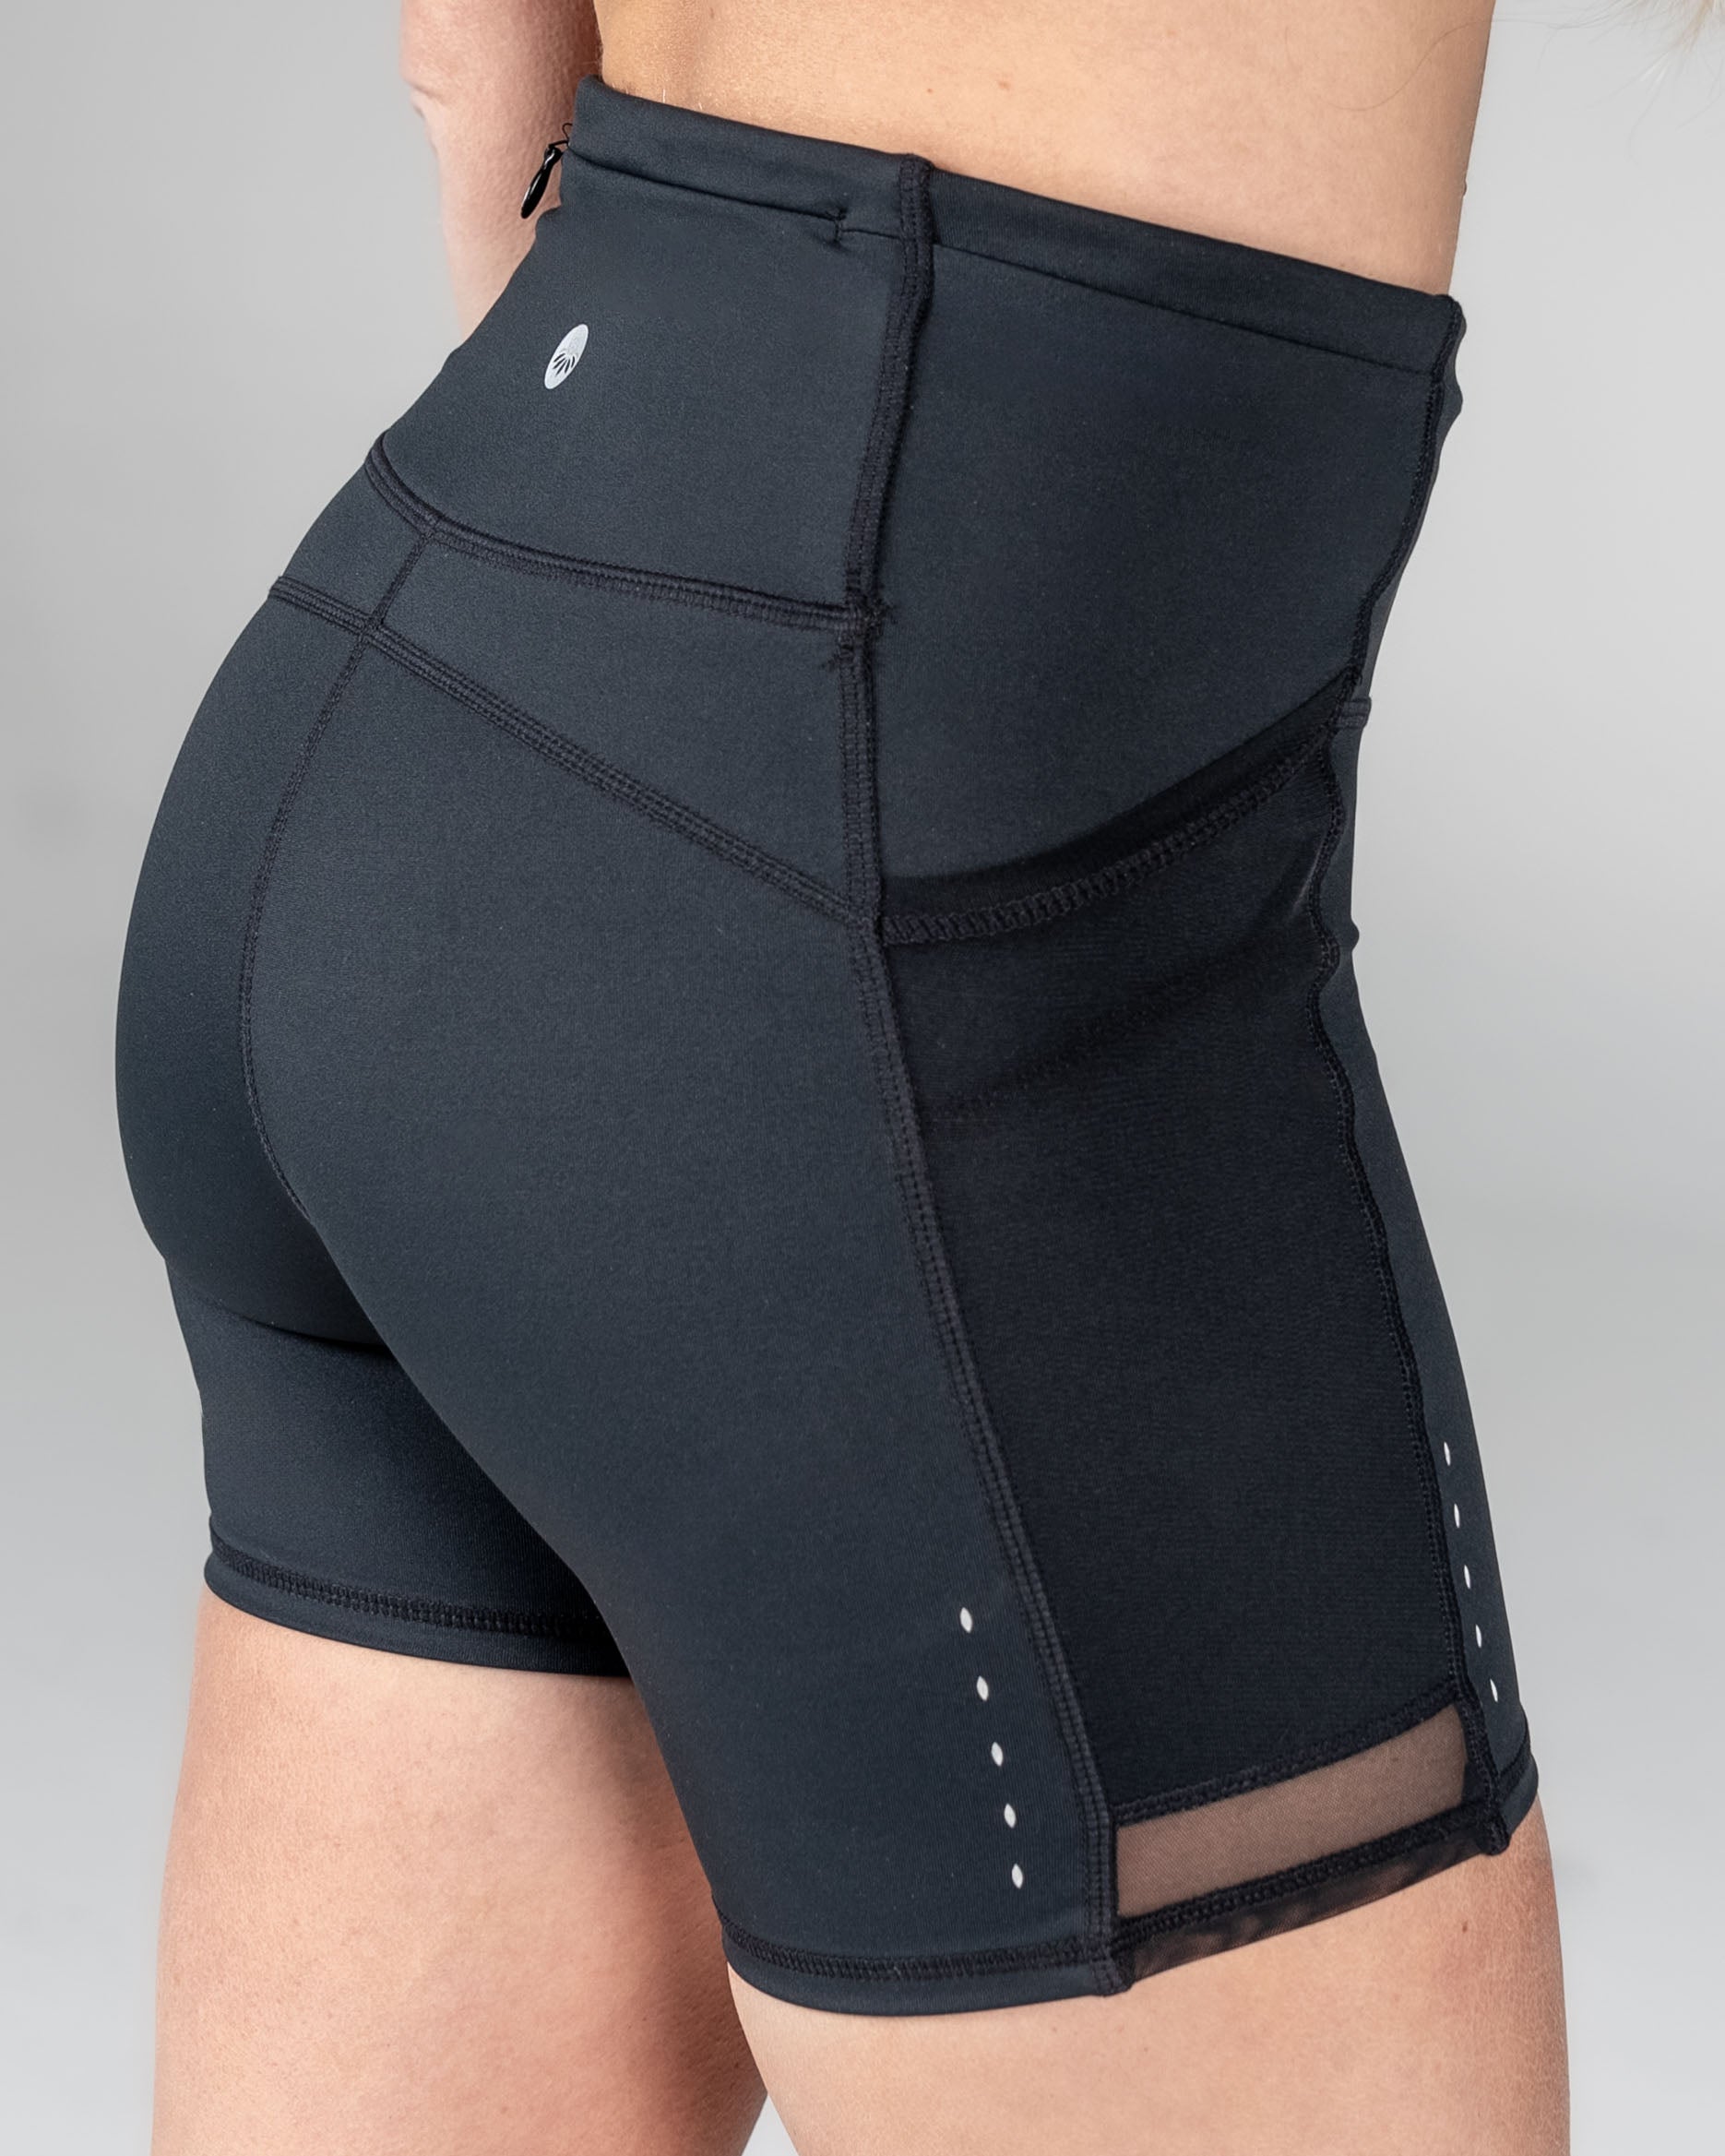 Lux Ultra Mesh Shorts (5 in. inseam) - Black